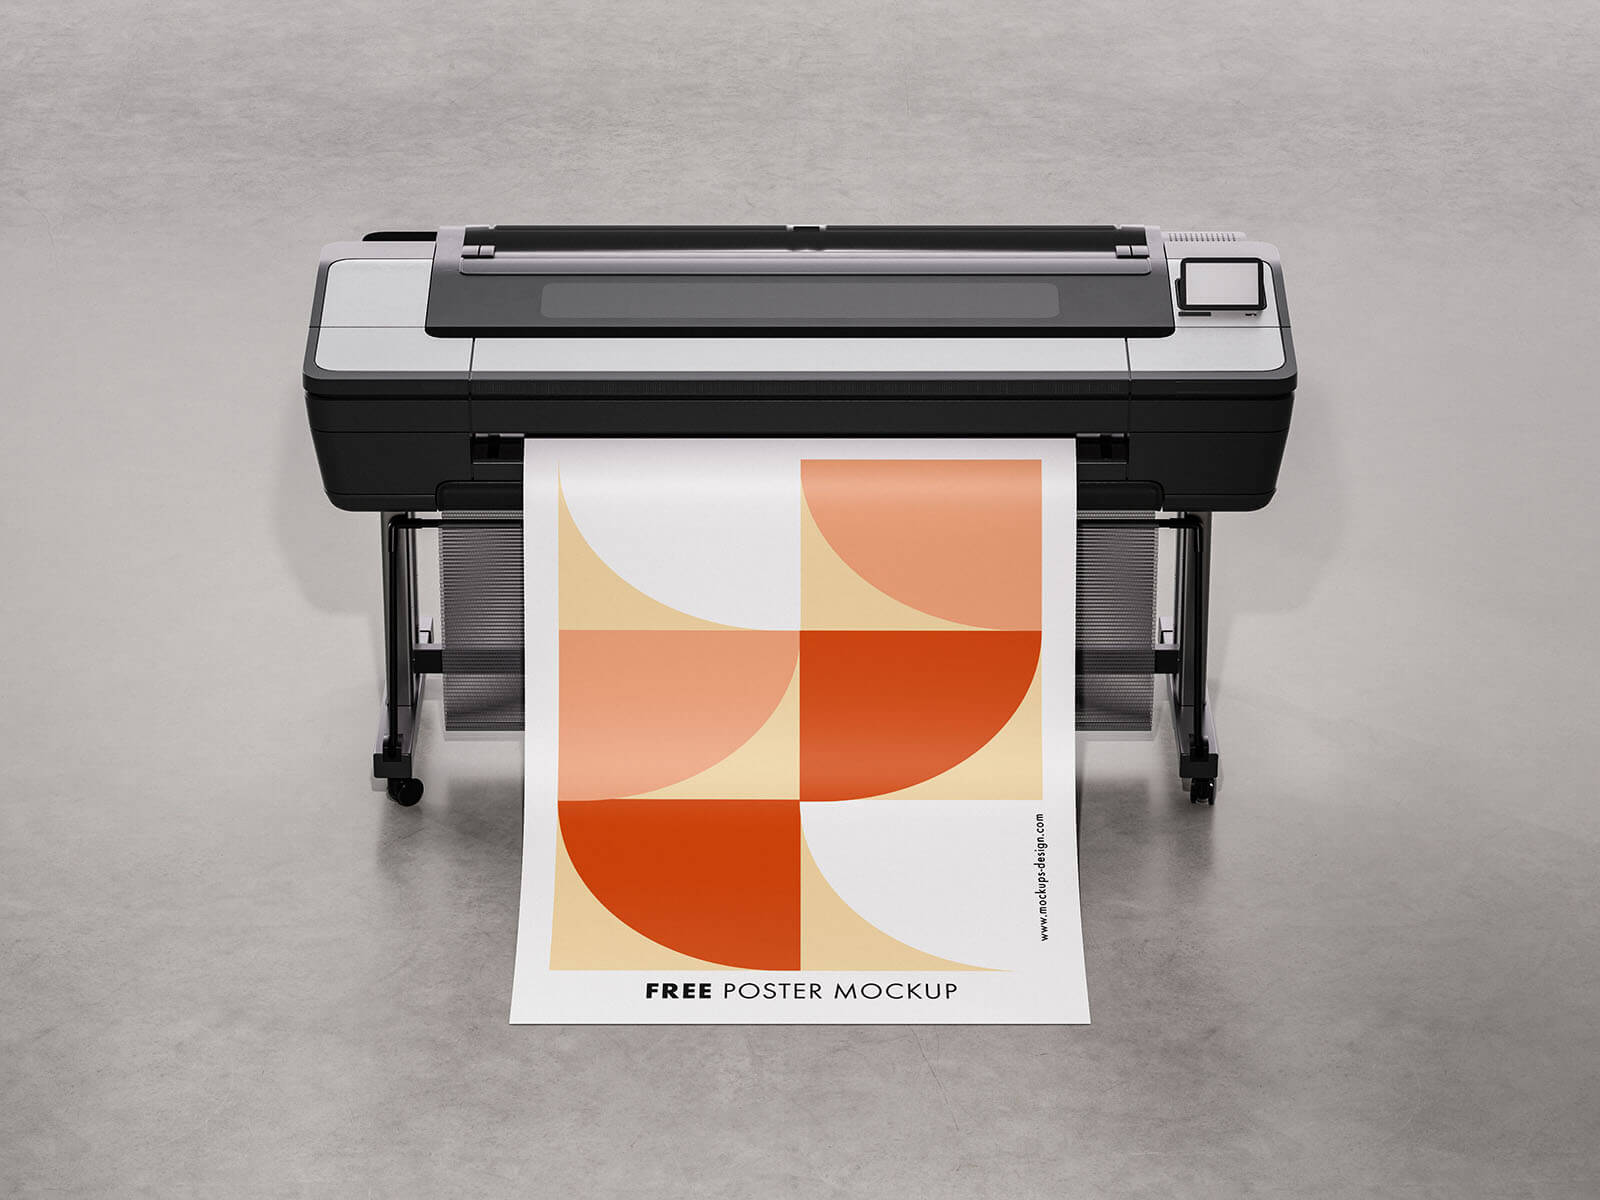 4 Free Plotter Printing Poster Mockup PSD Files